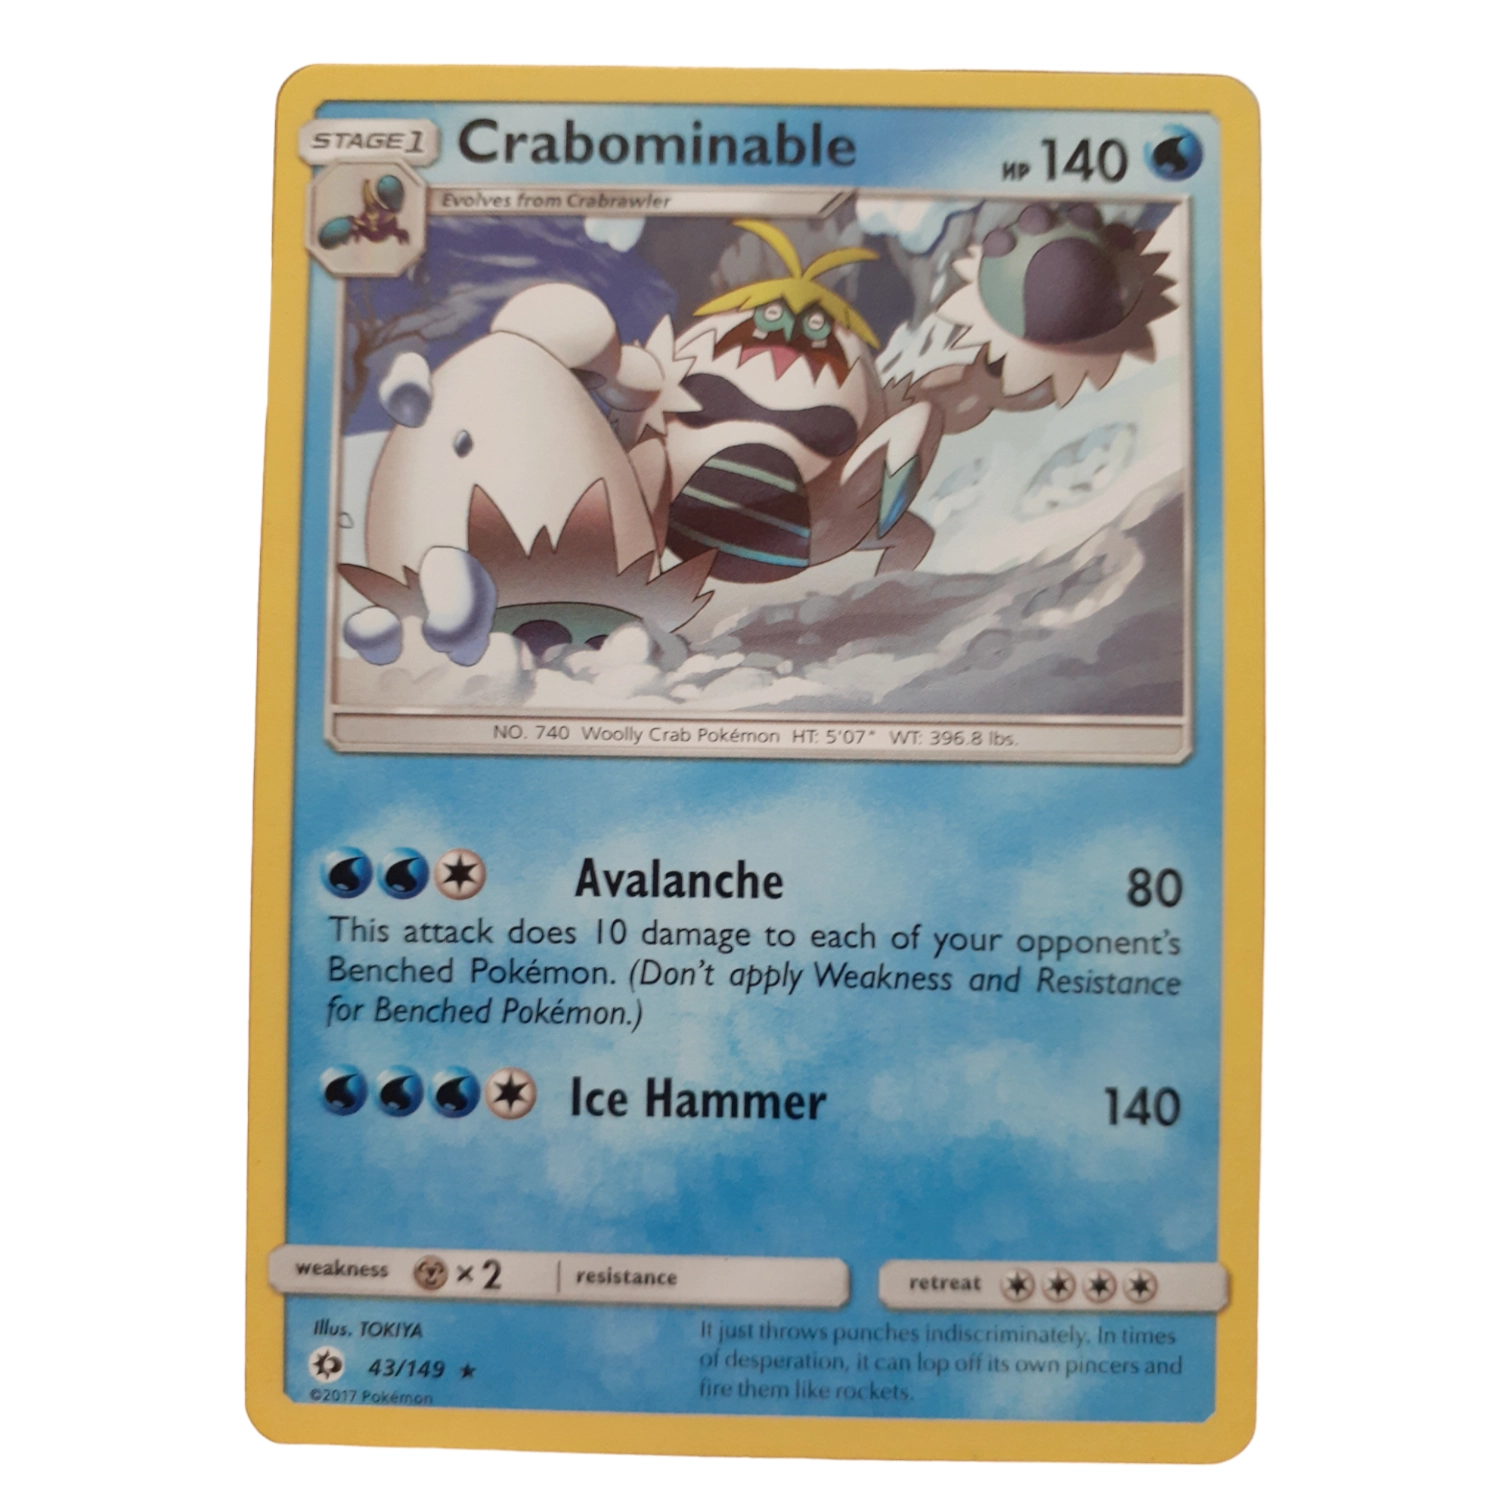 43/149 - Crabominable